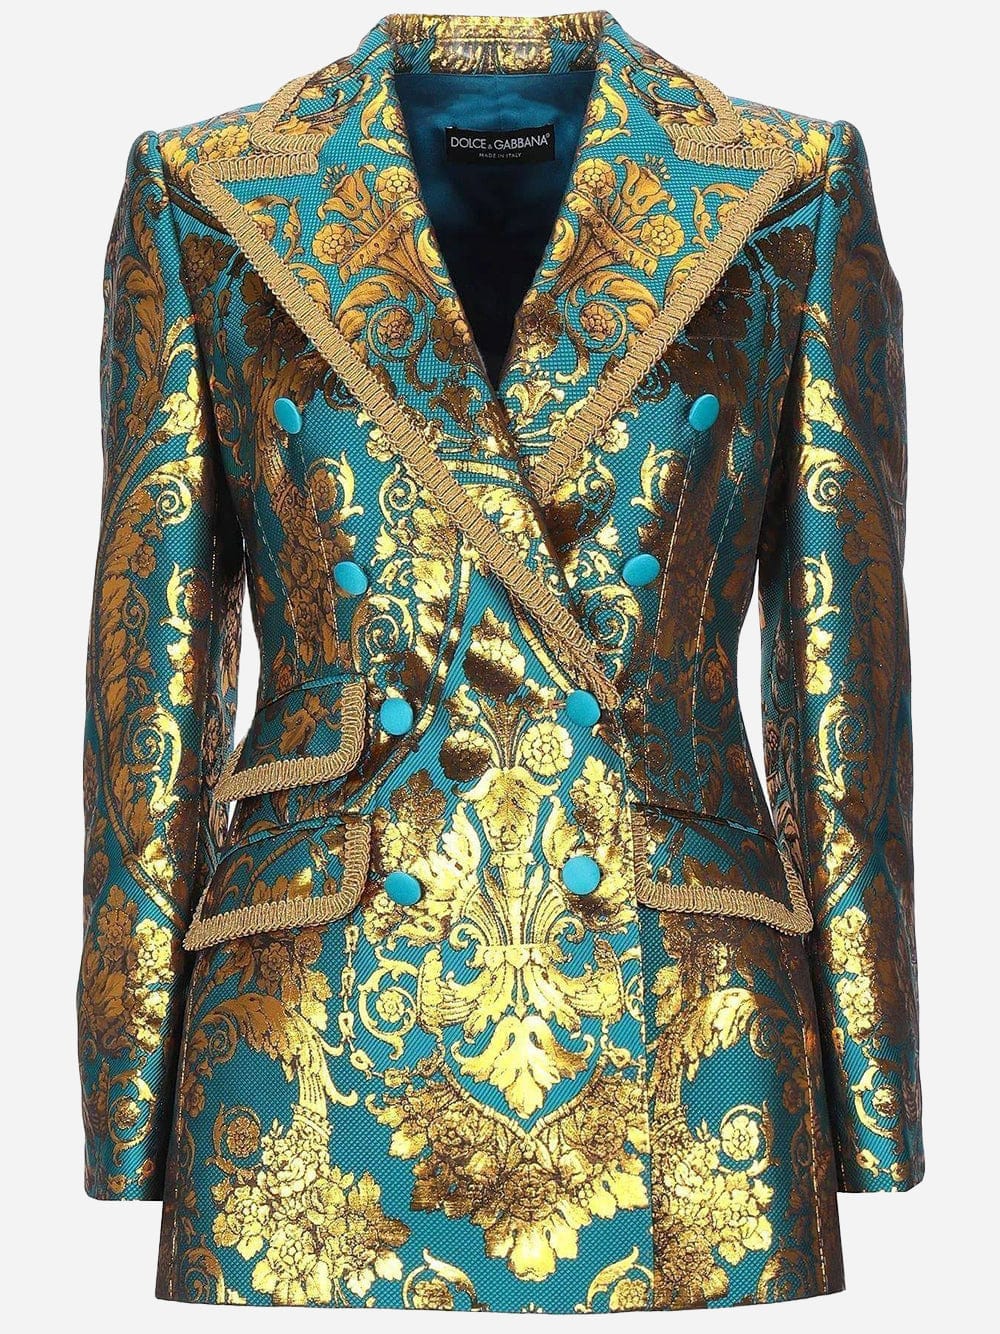 Dolce & Gabbana Metallic Jacquard Jacket